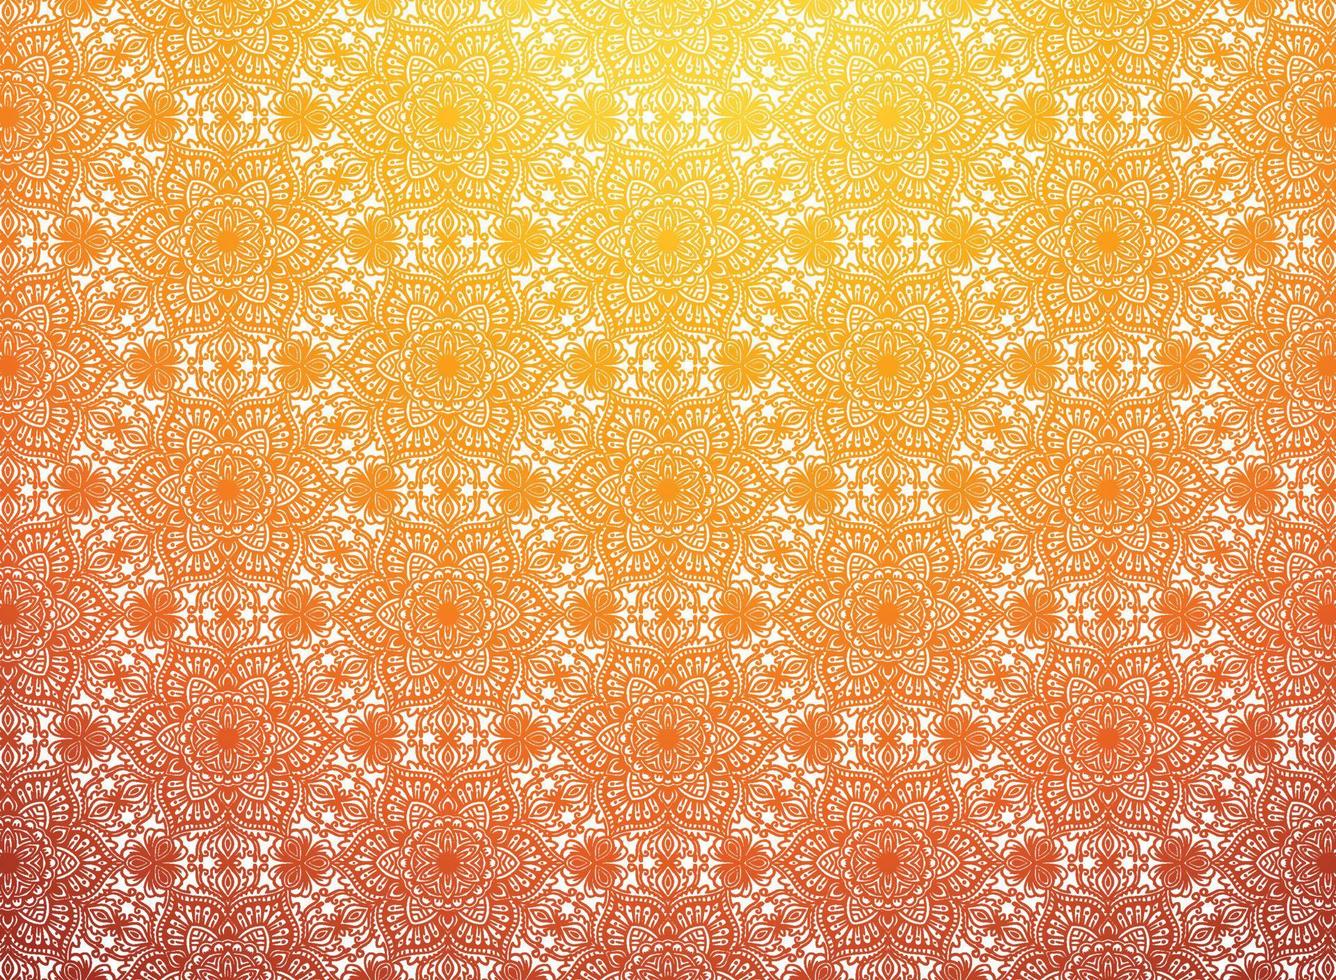 Ethnic decorative colorful floral mandala pattern background vector